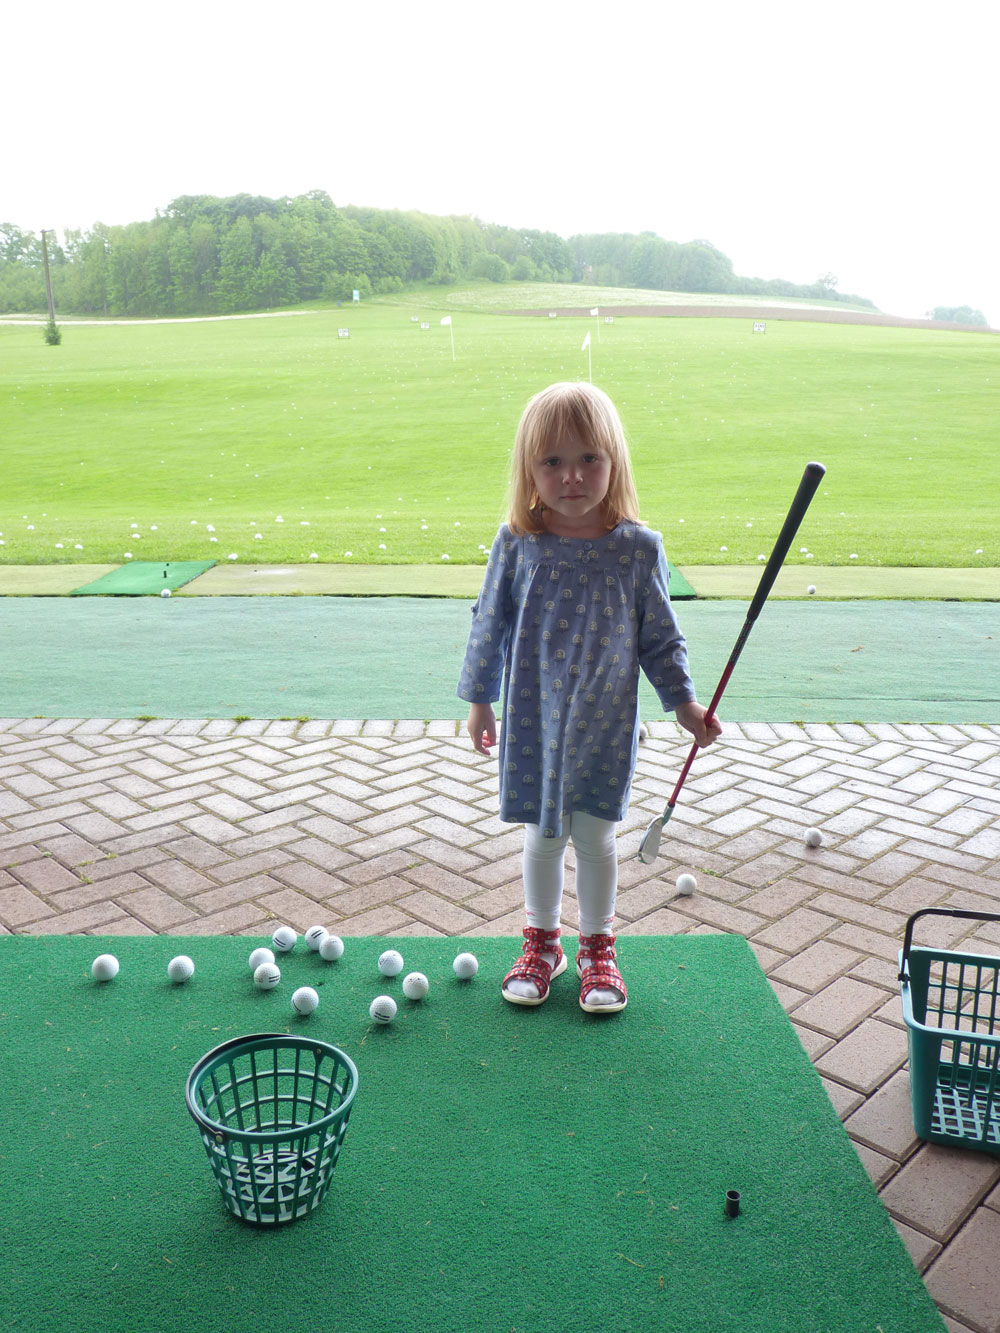 Früh übt sich. Foto: GolfSport SorpeSee GmbH & Co. KG.